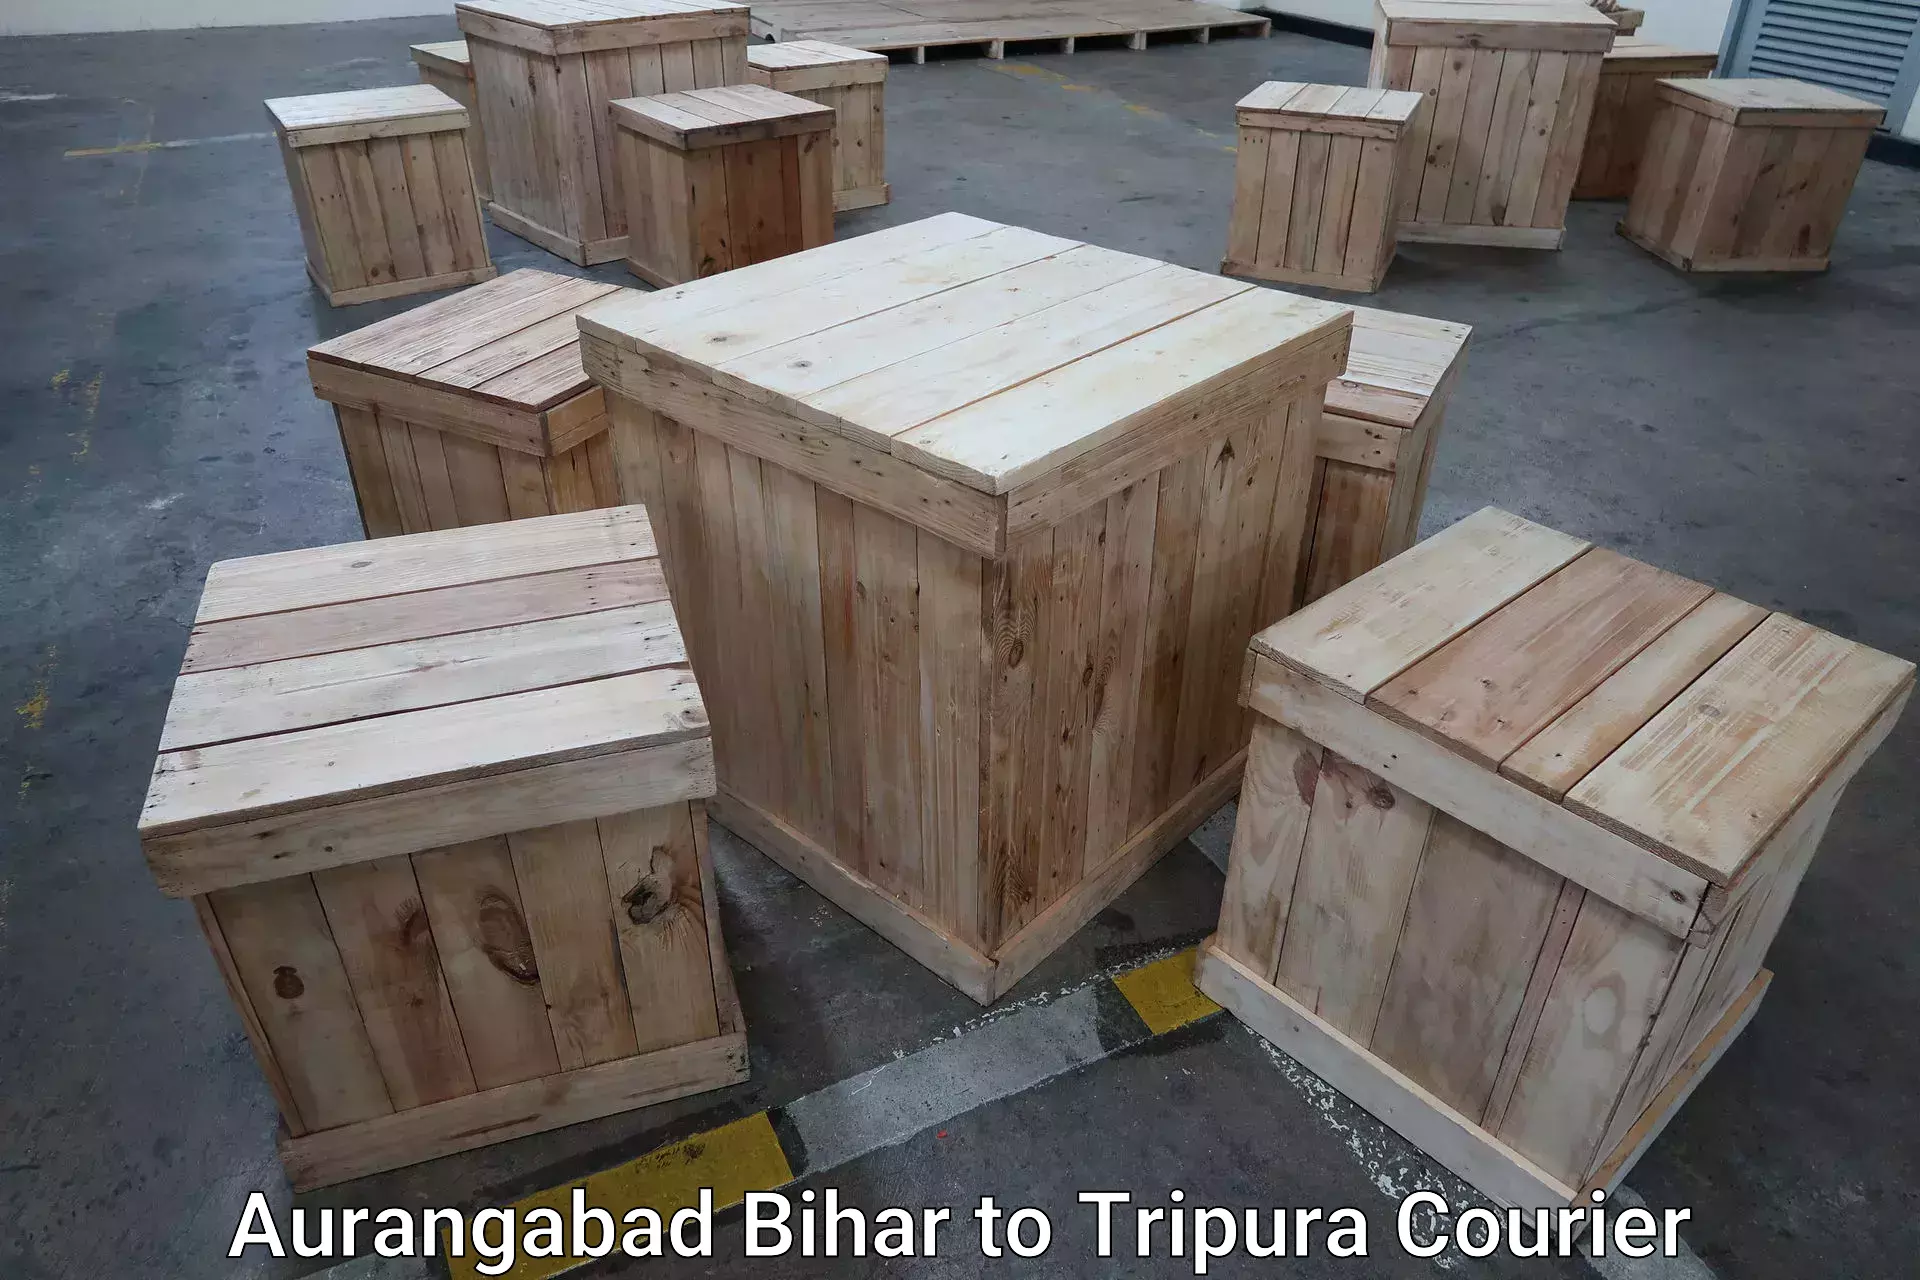 Baggage transport estimate Aurangabad Bihar to Udaipur Tripura